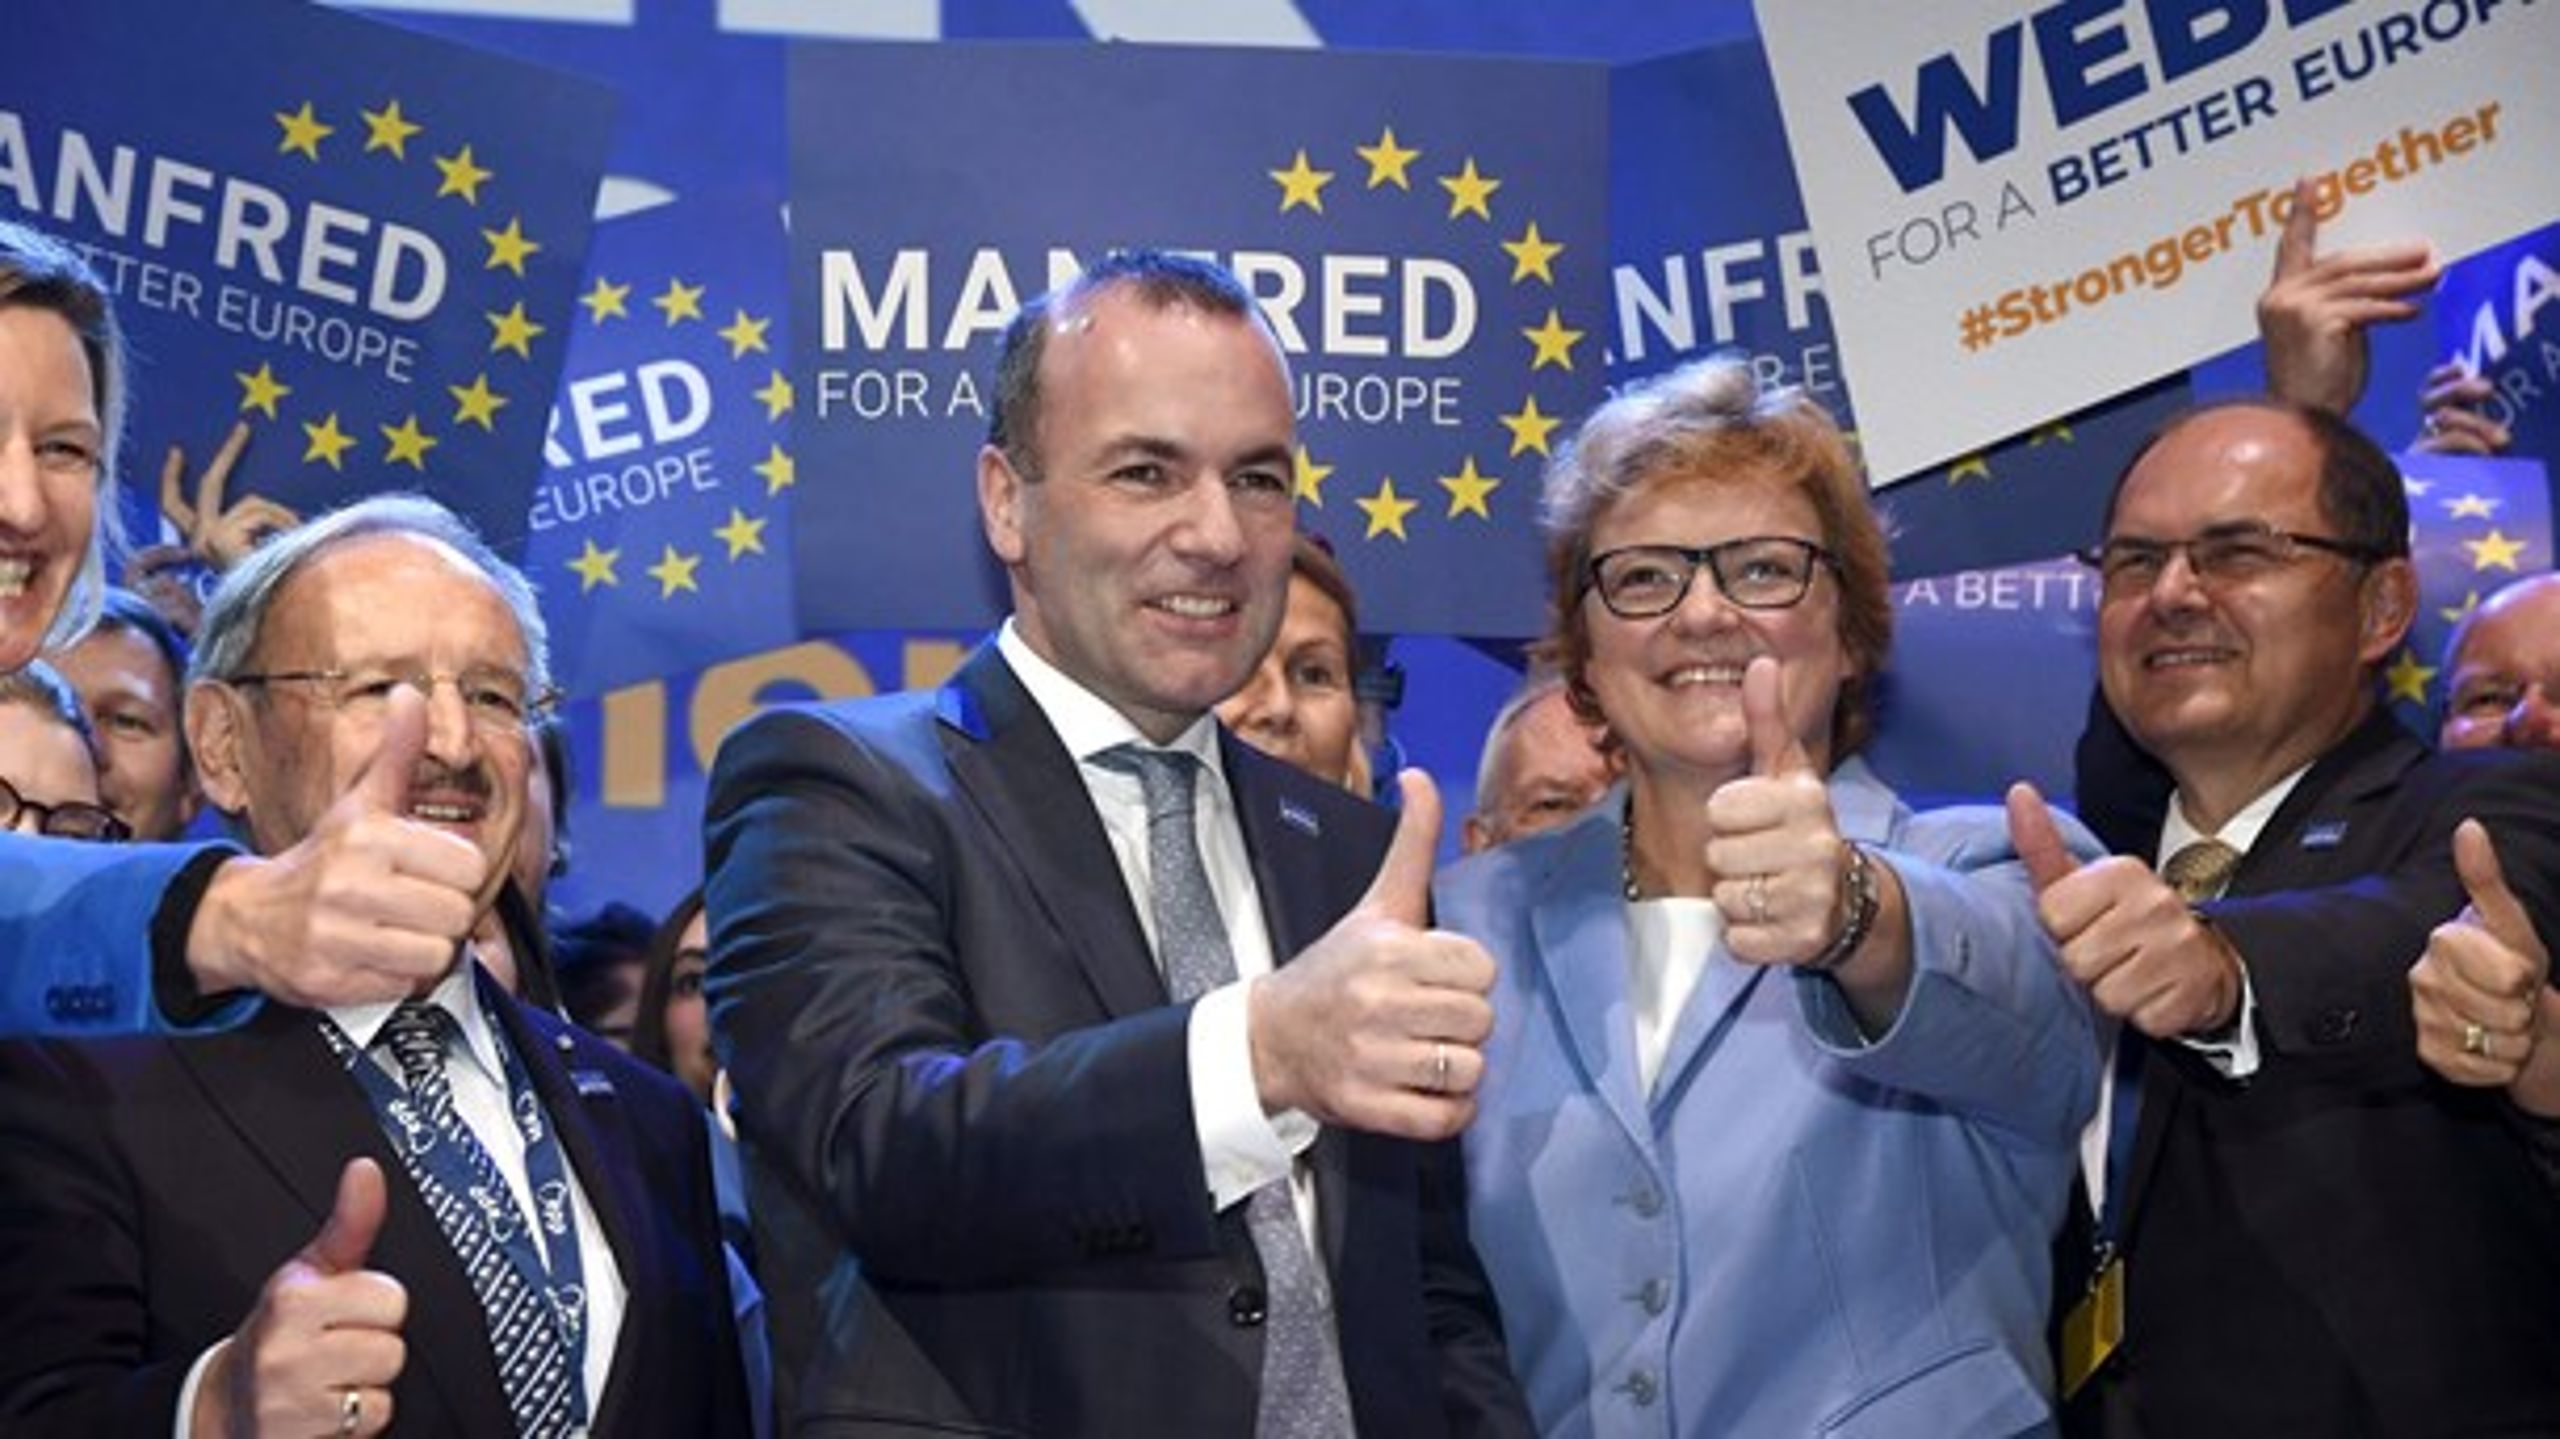 Der er fem gode grunde til, at Danmarks Konservative i EU stemte på Manfred Weber som EPP's spitzenkandidat. Det skriver kandidat til Parlamentet Pernille Weiss (K).